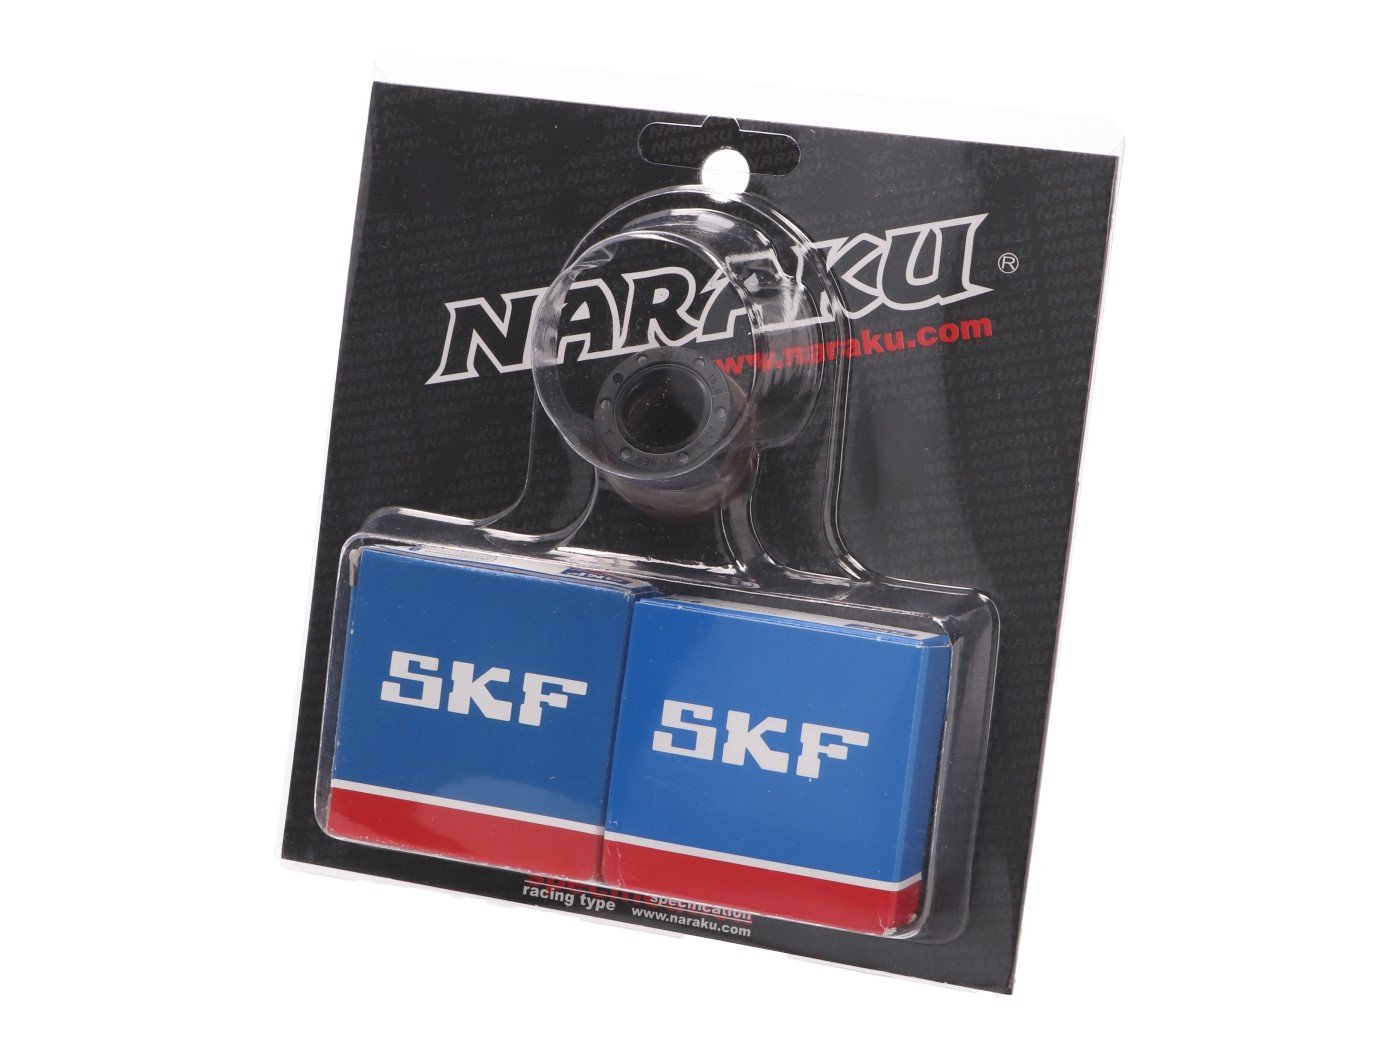 Kurbelwellenlager Satz Naraku SKF für Peugeot Euro 1